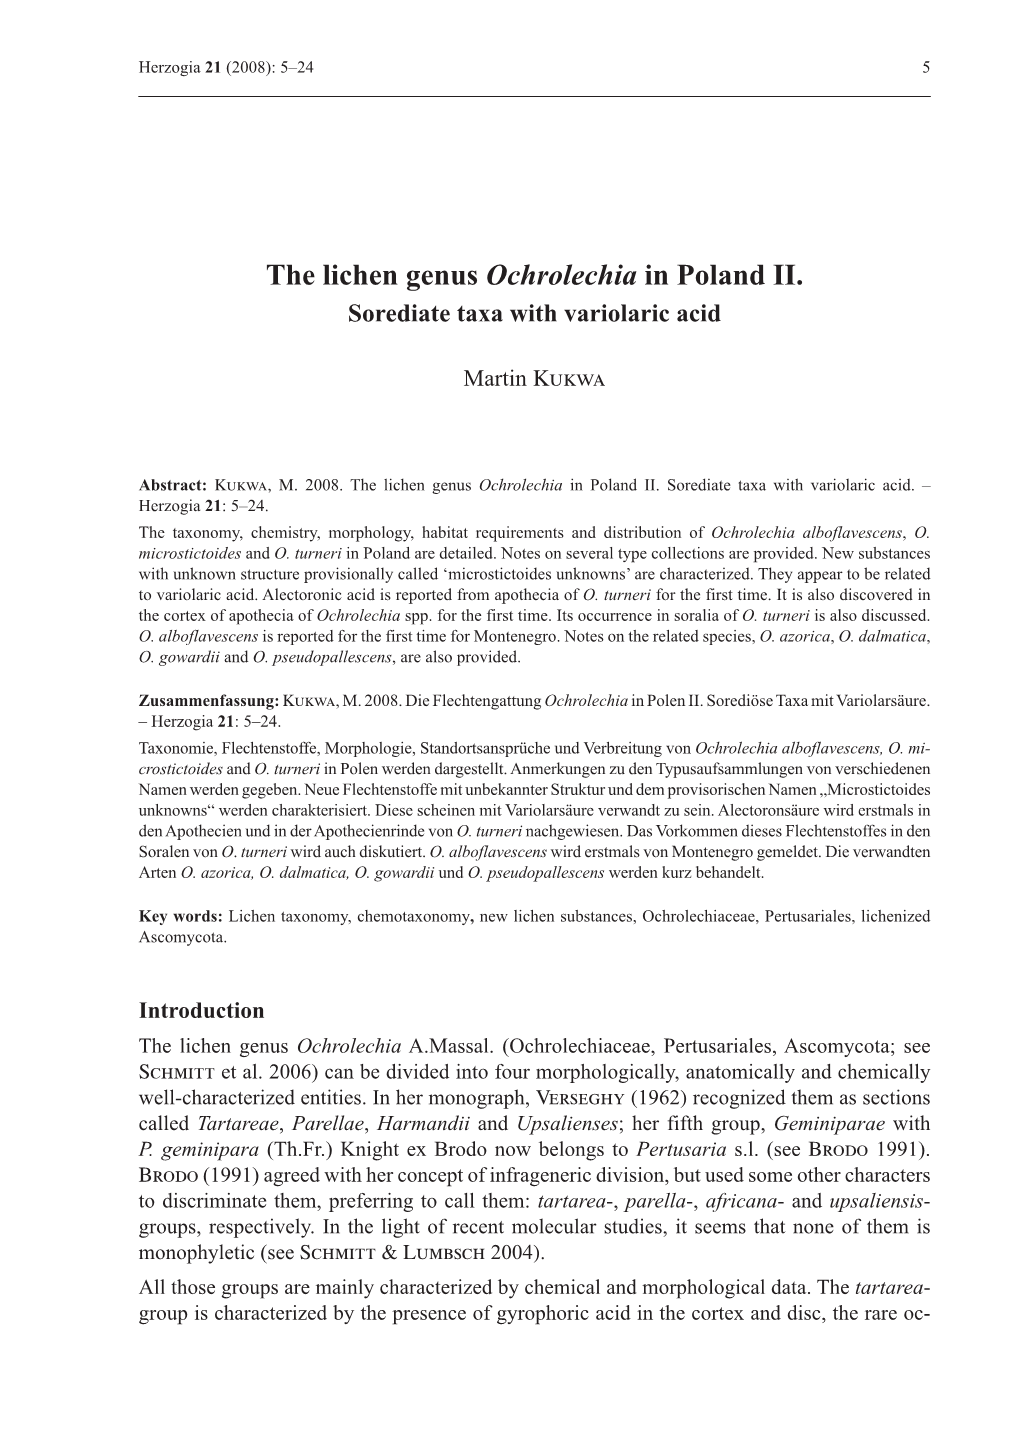 The Lichen Genus Ochrolechia in Poland II